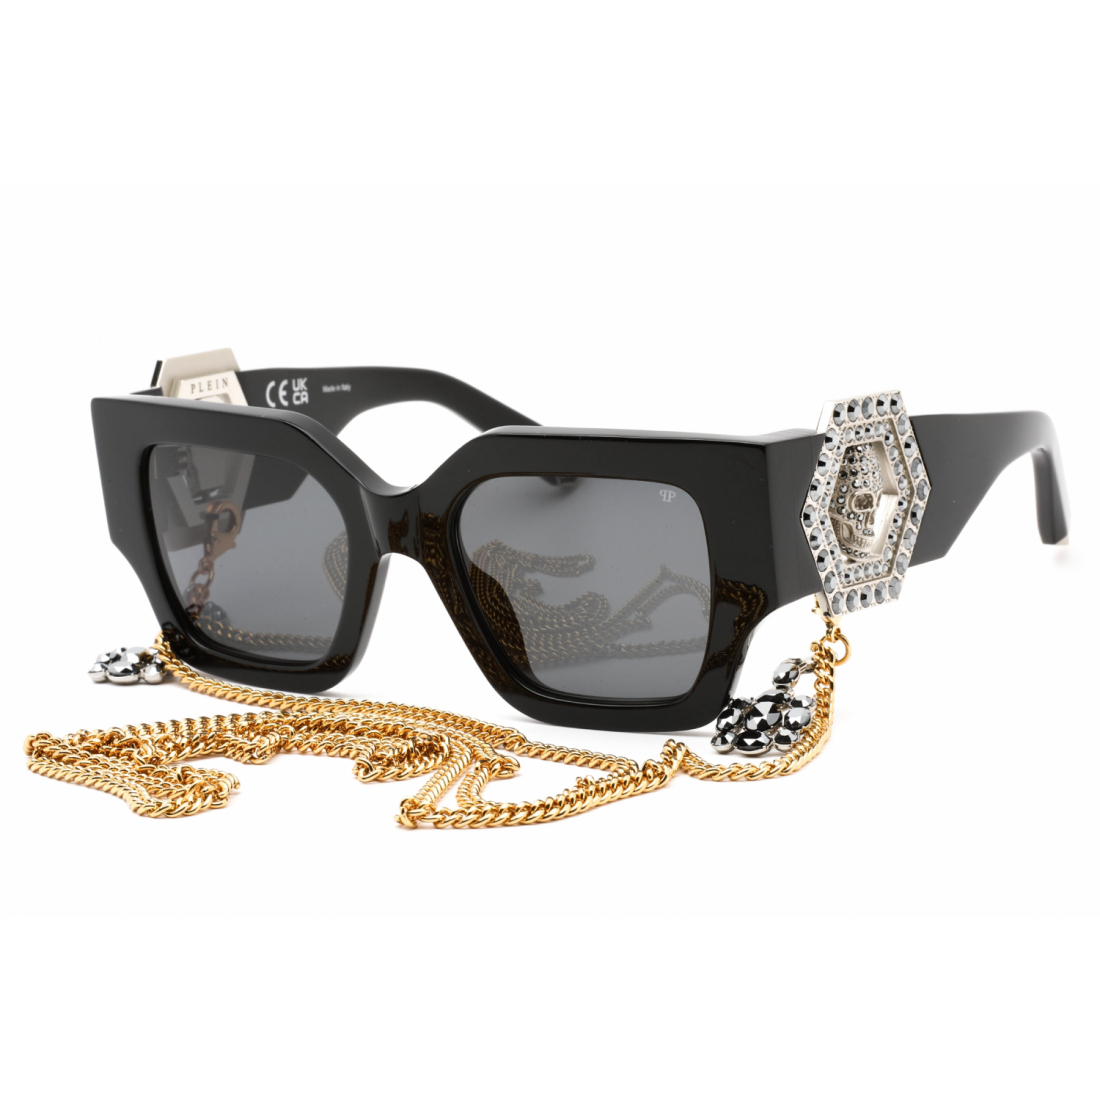 Women's 'SPP103S' Sunglasses